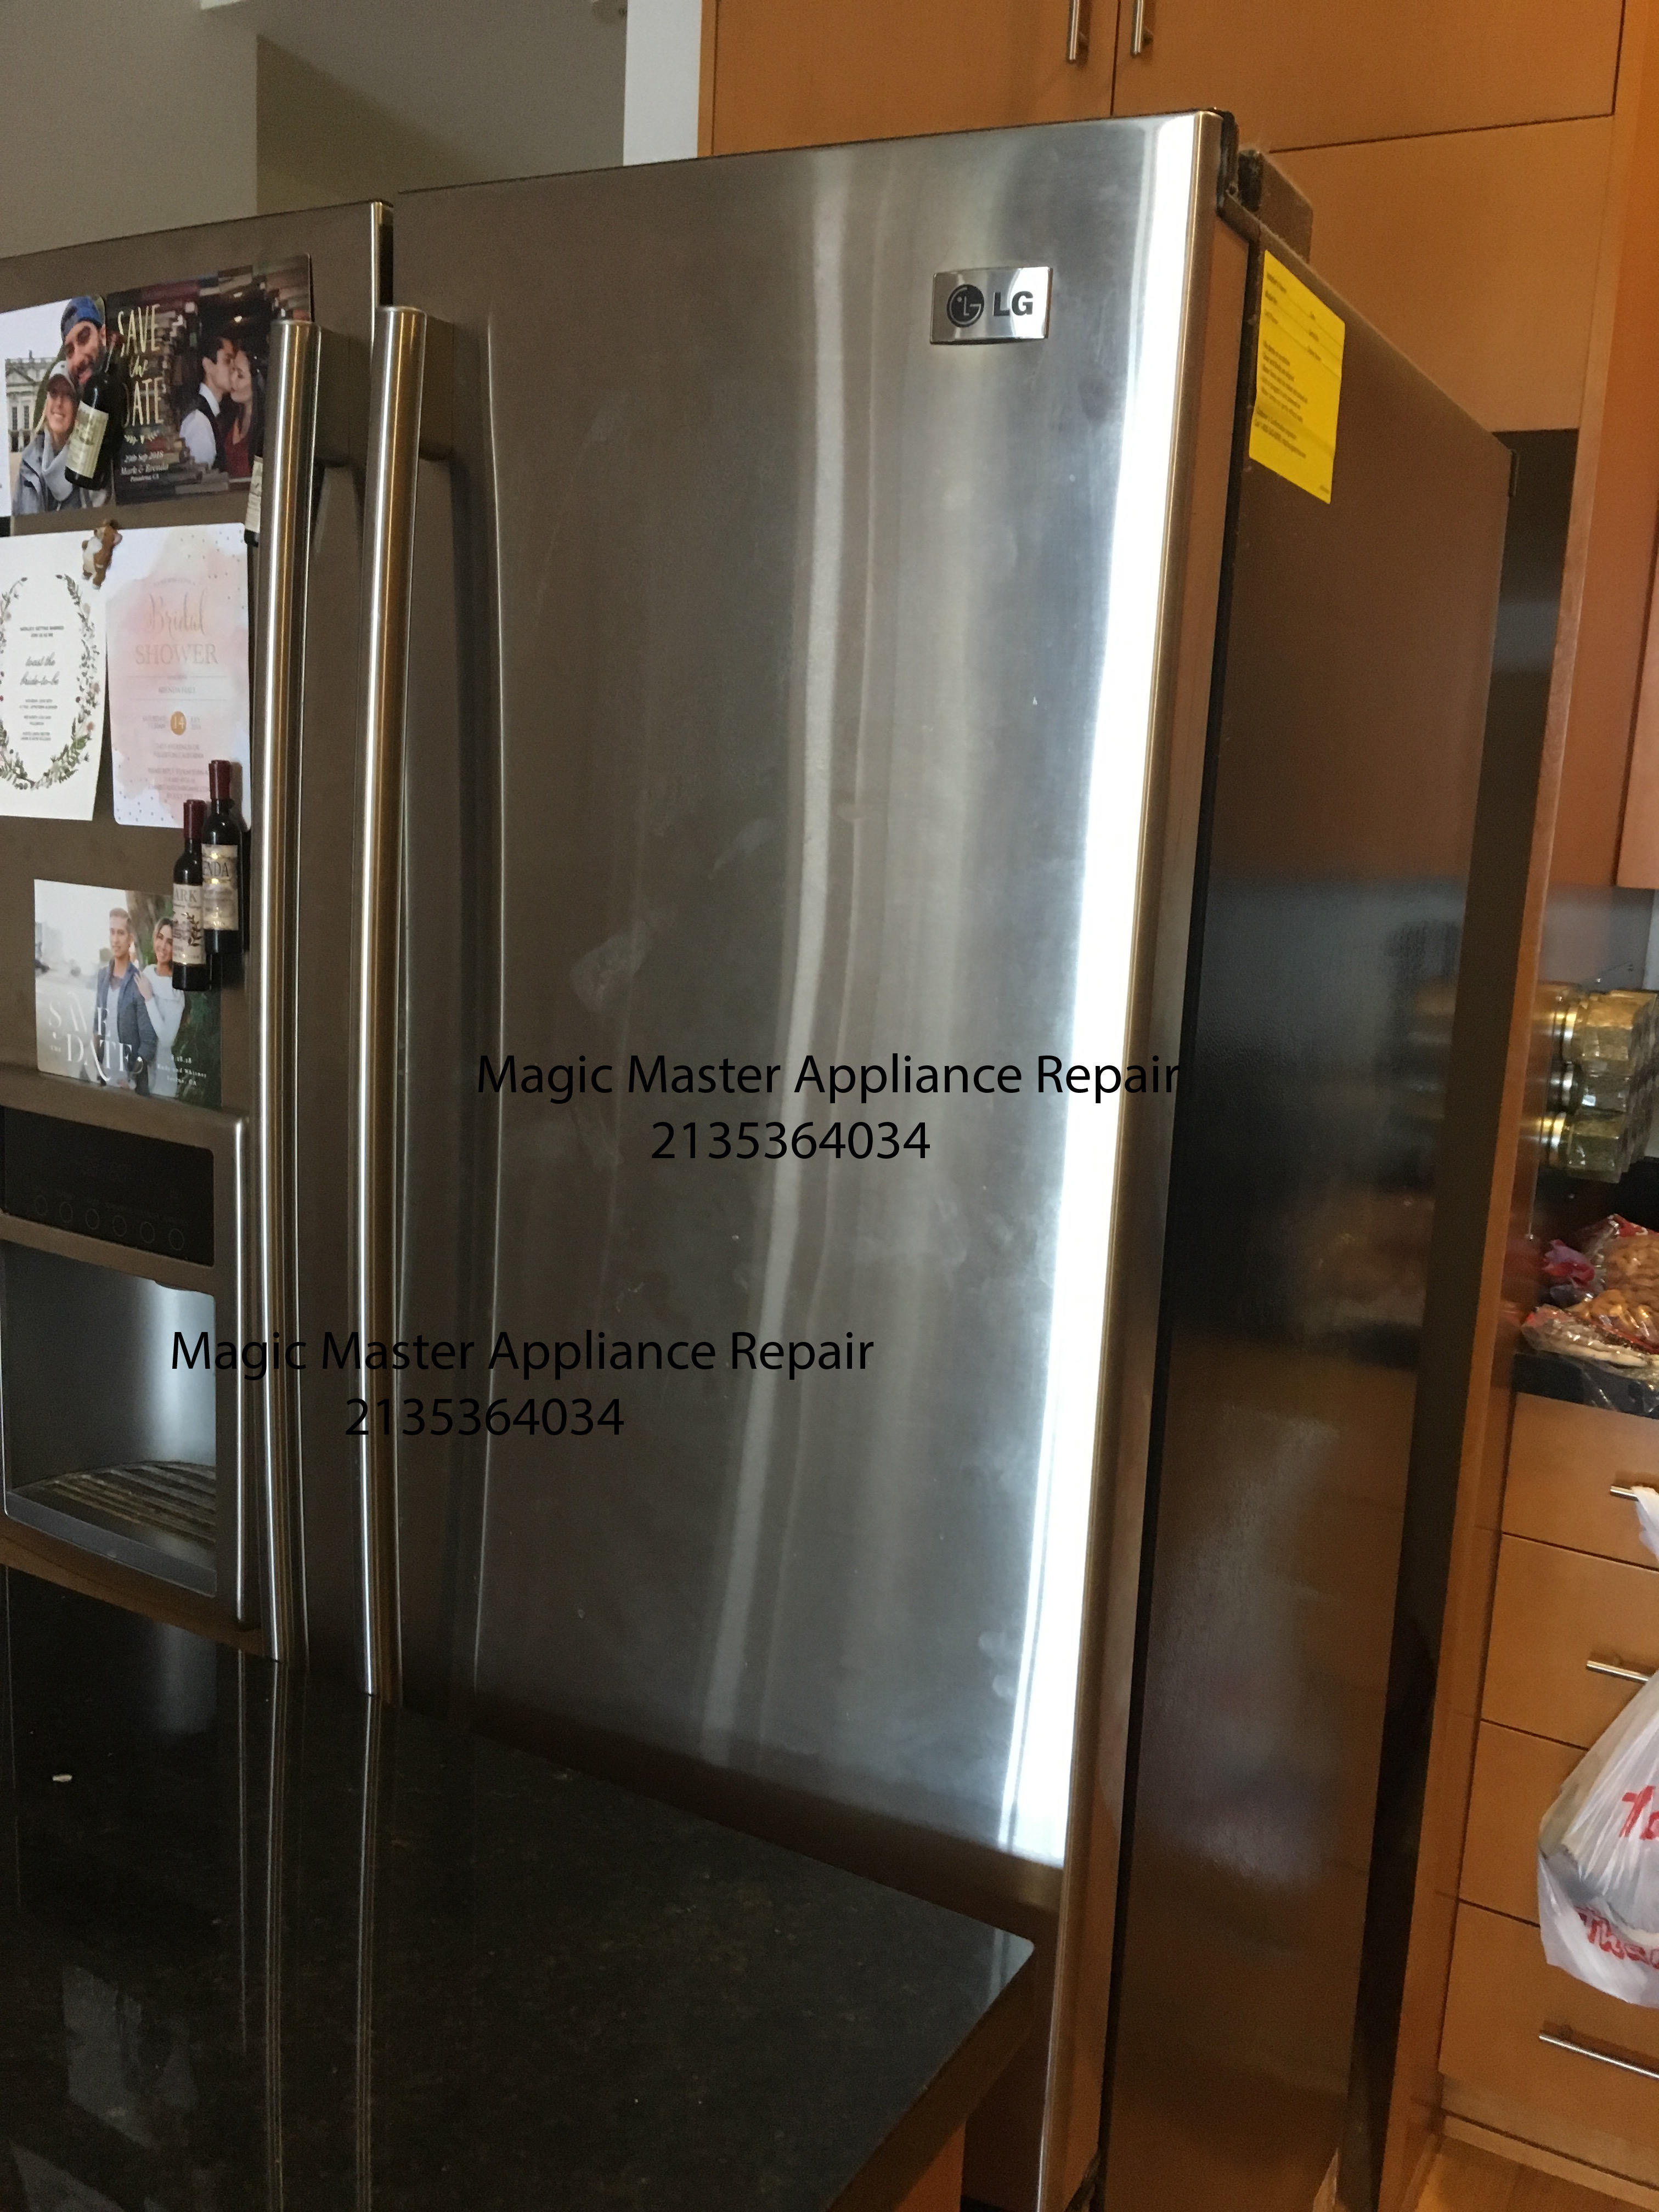 Magic Master Appliance Repair